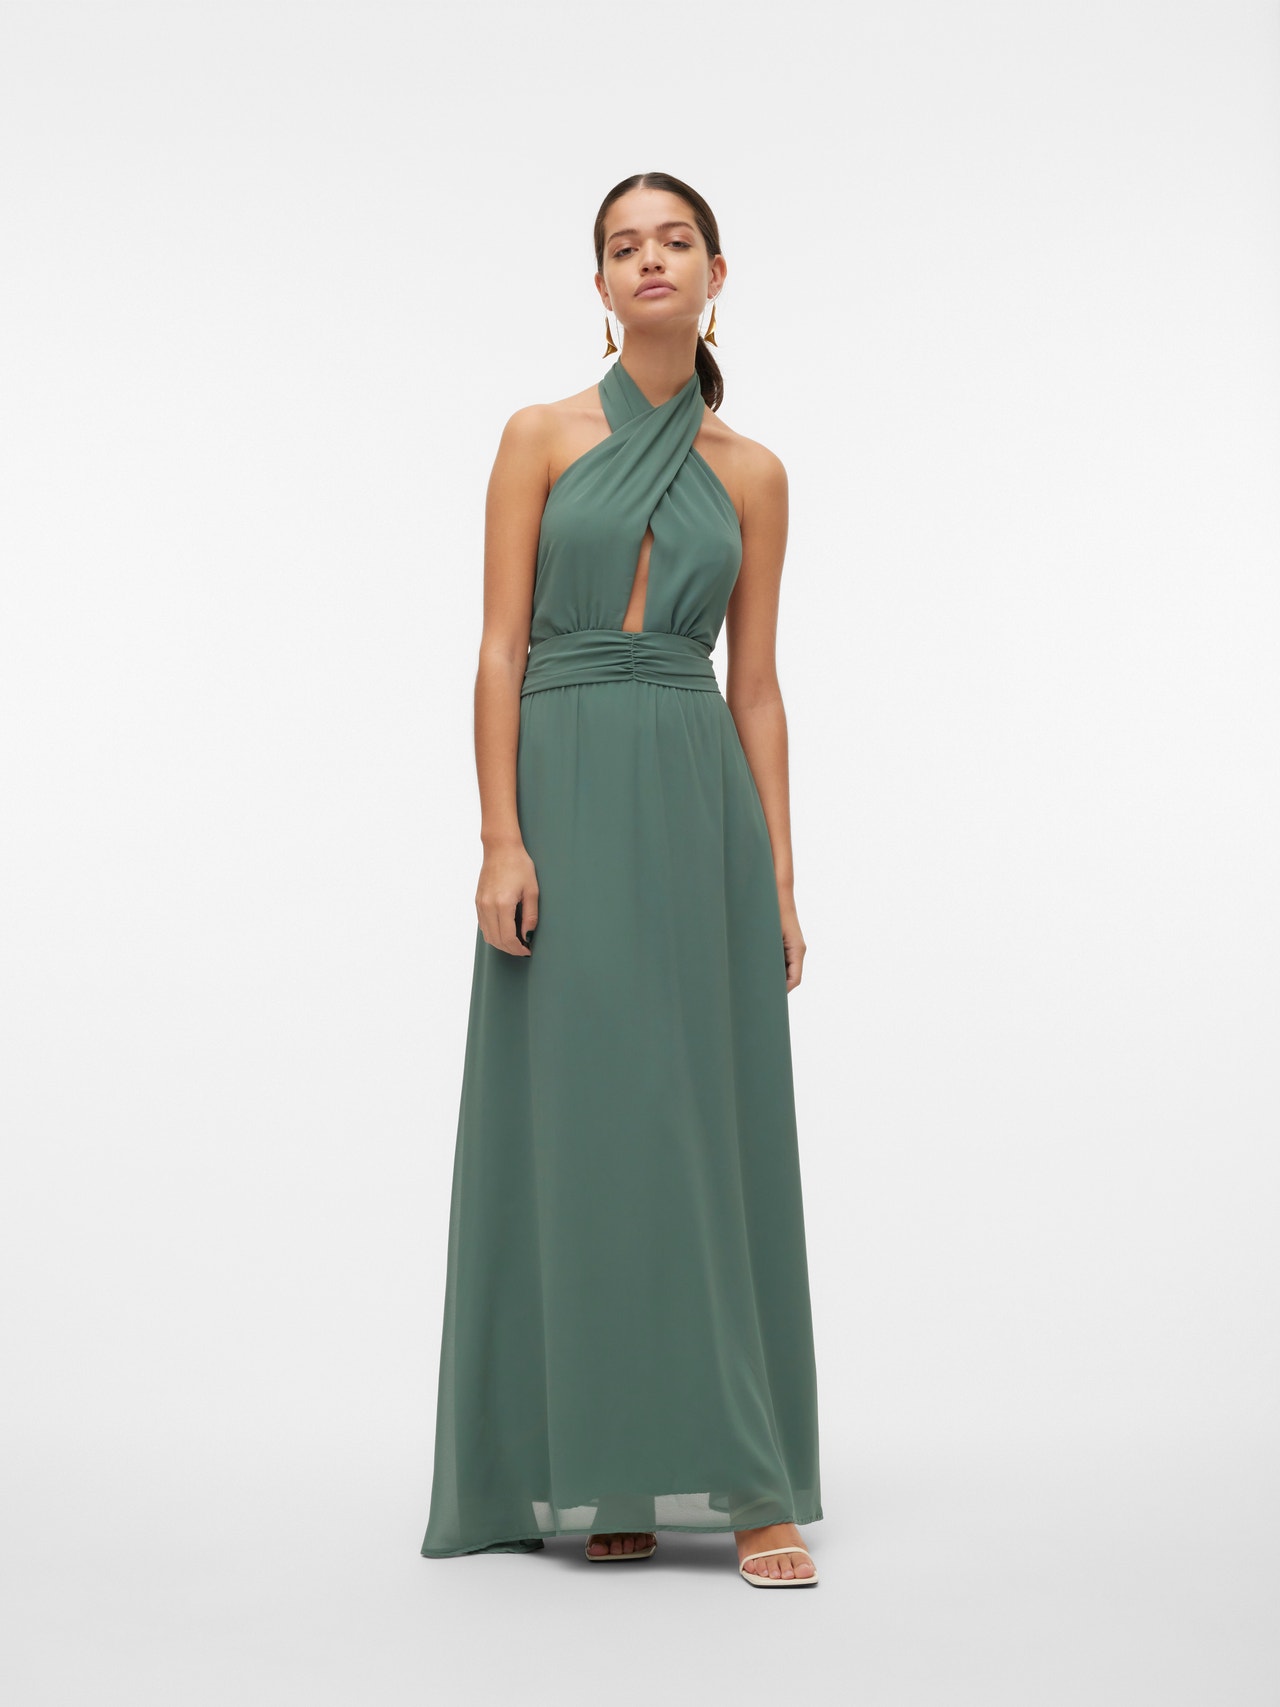 Vero Moda VMBLUEBELLE Long dress -Laurel Wreath - 10305678